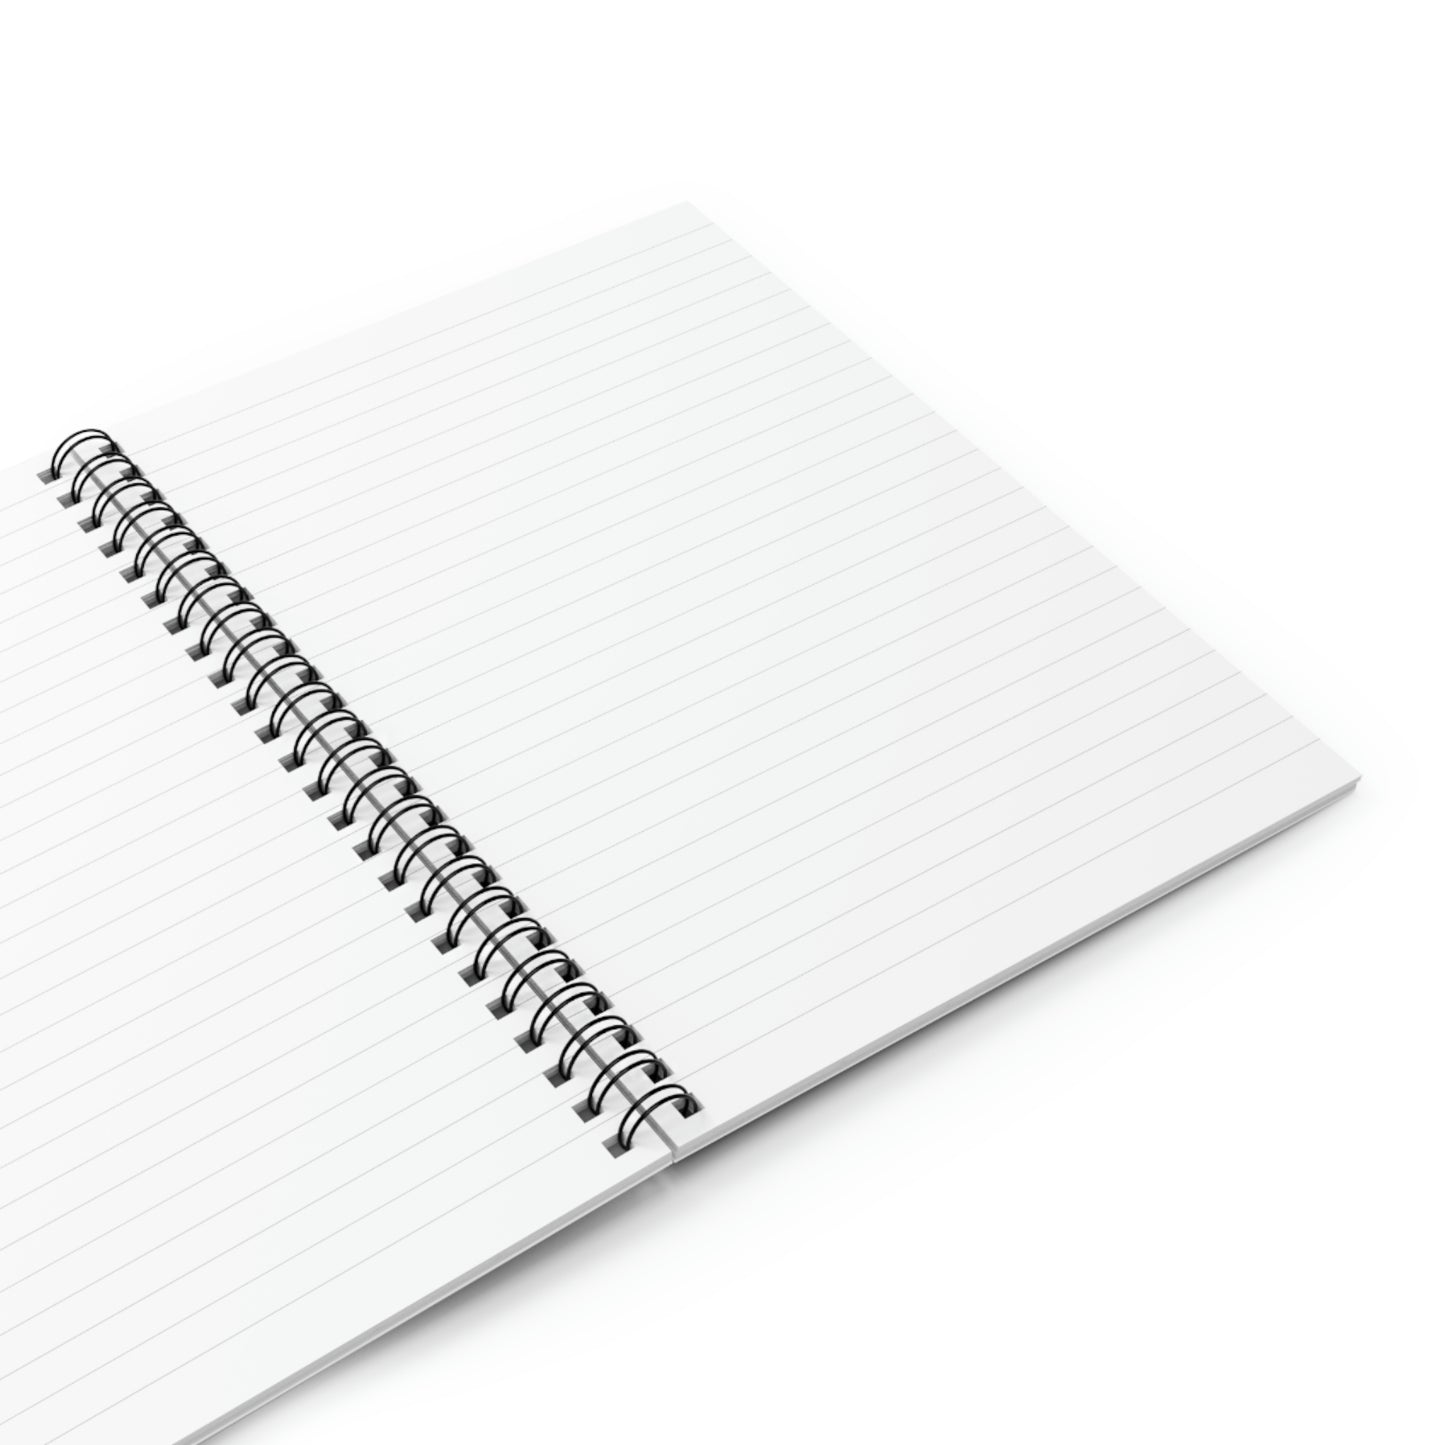 IPA Notebook